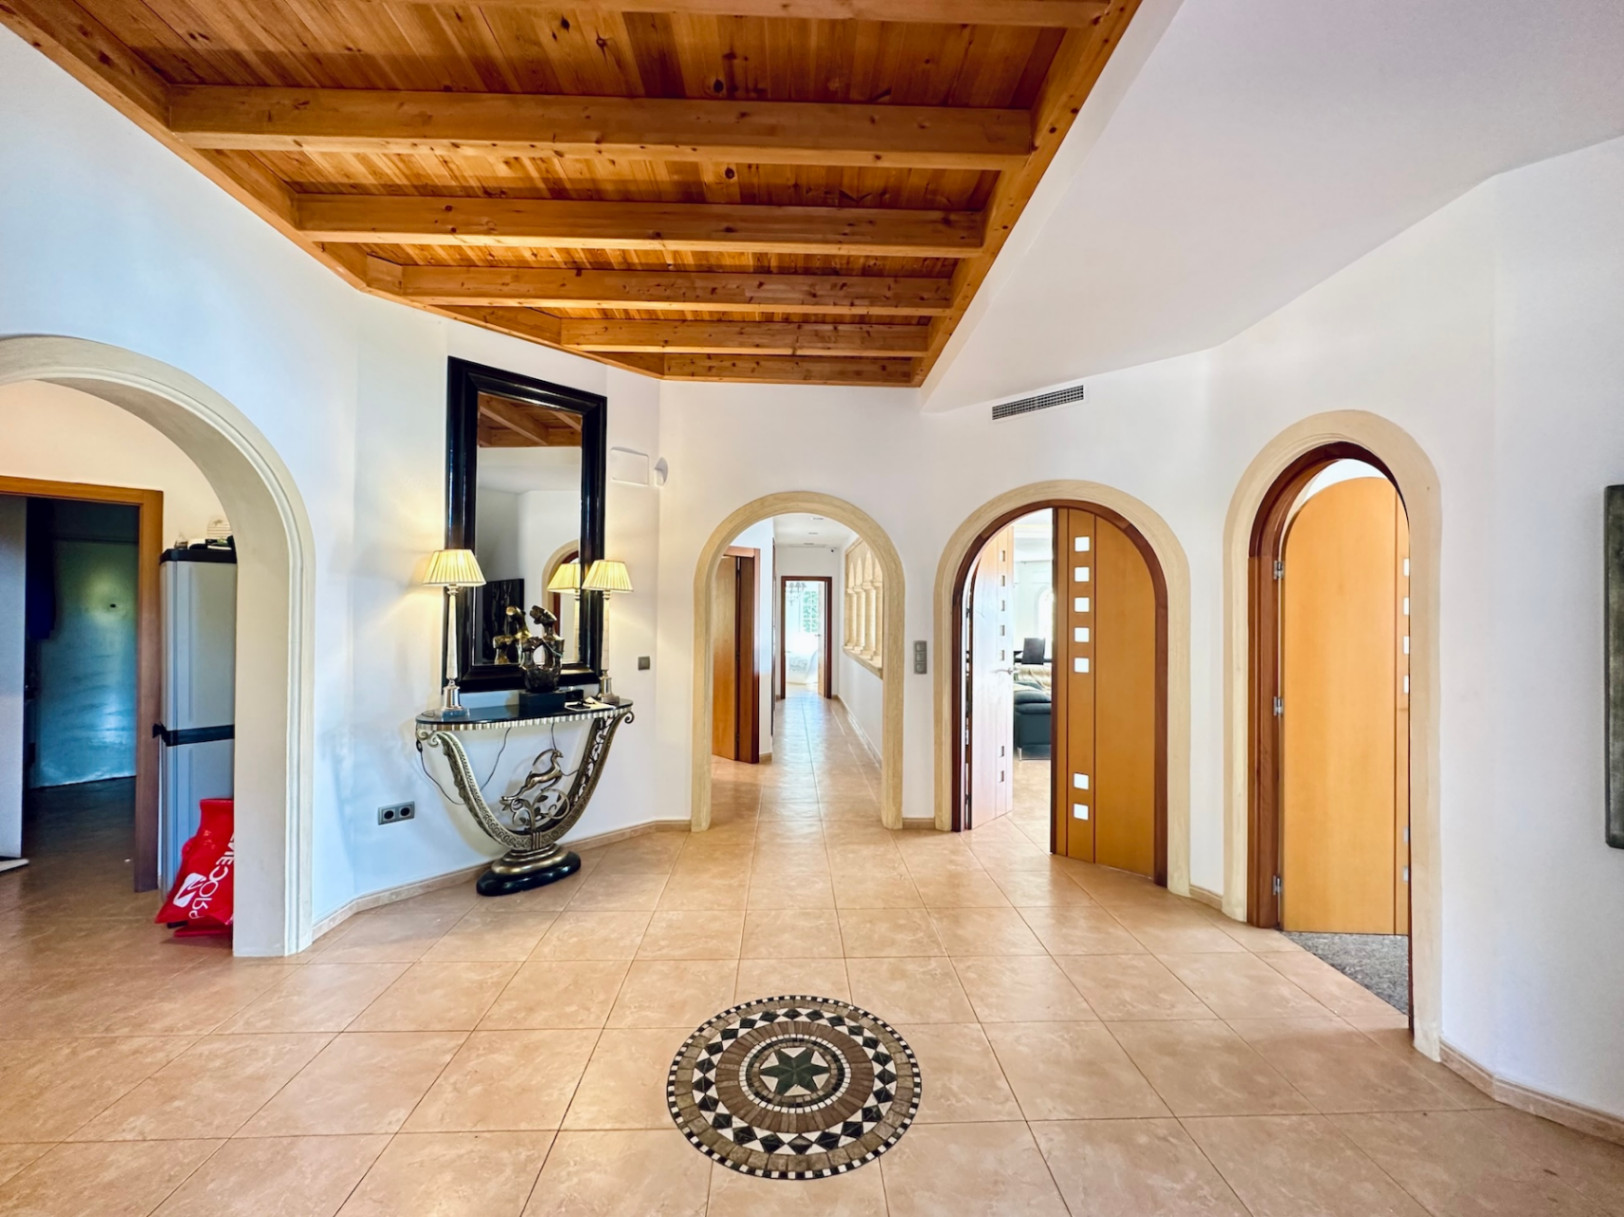 Luxurious Spanish villa with open views